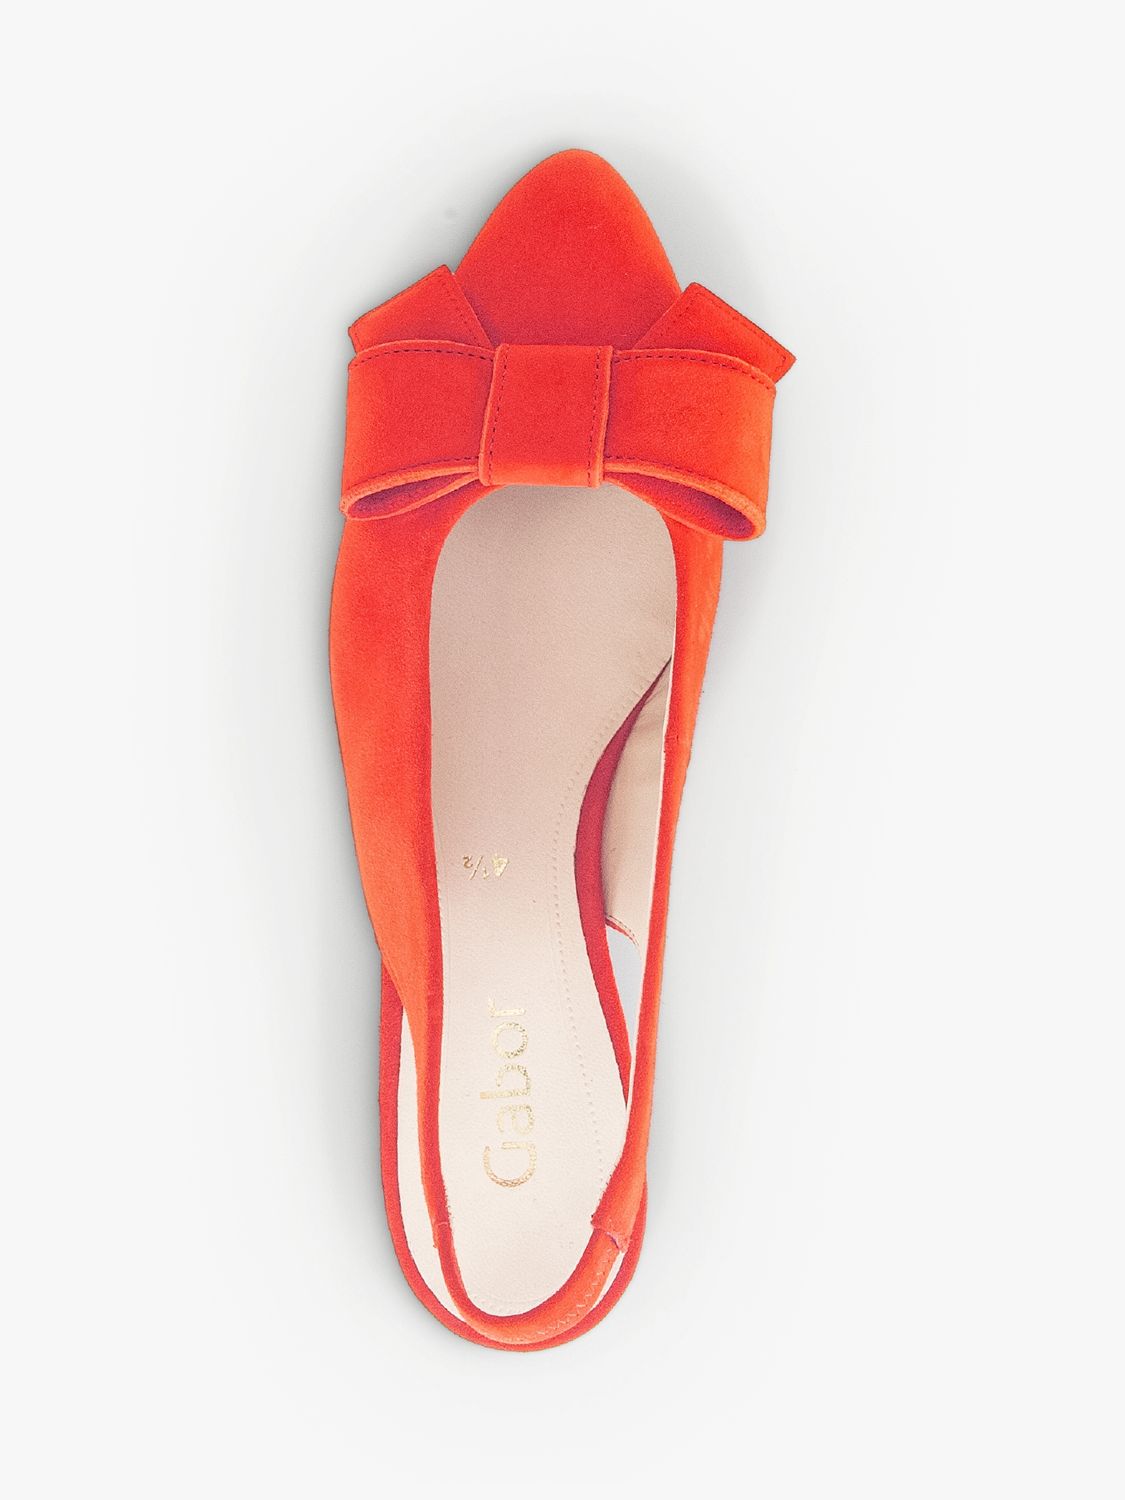 Gabor Monte Carlo Suede Large Bow Detail Slingback Shoes, Pumpkin, 3